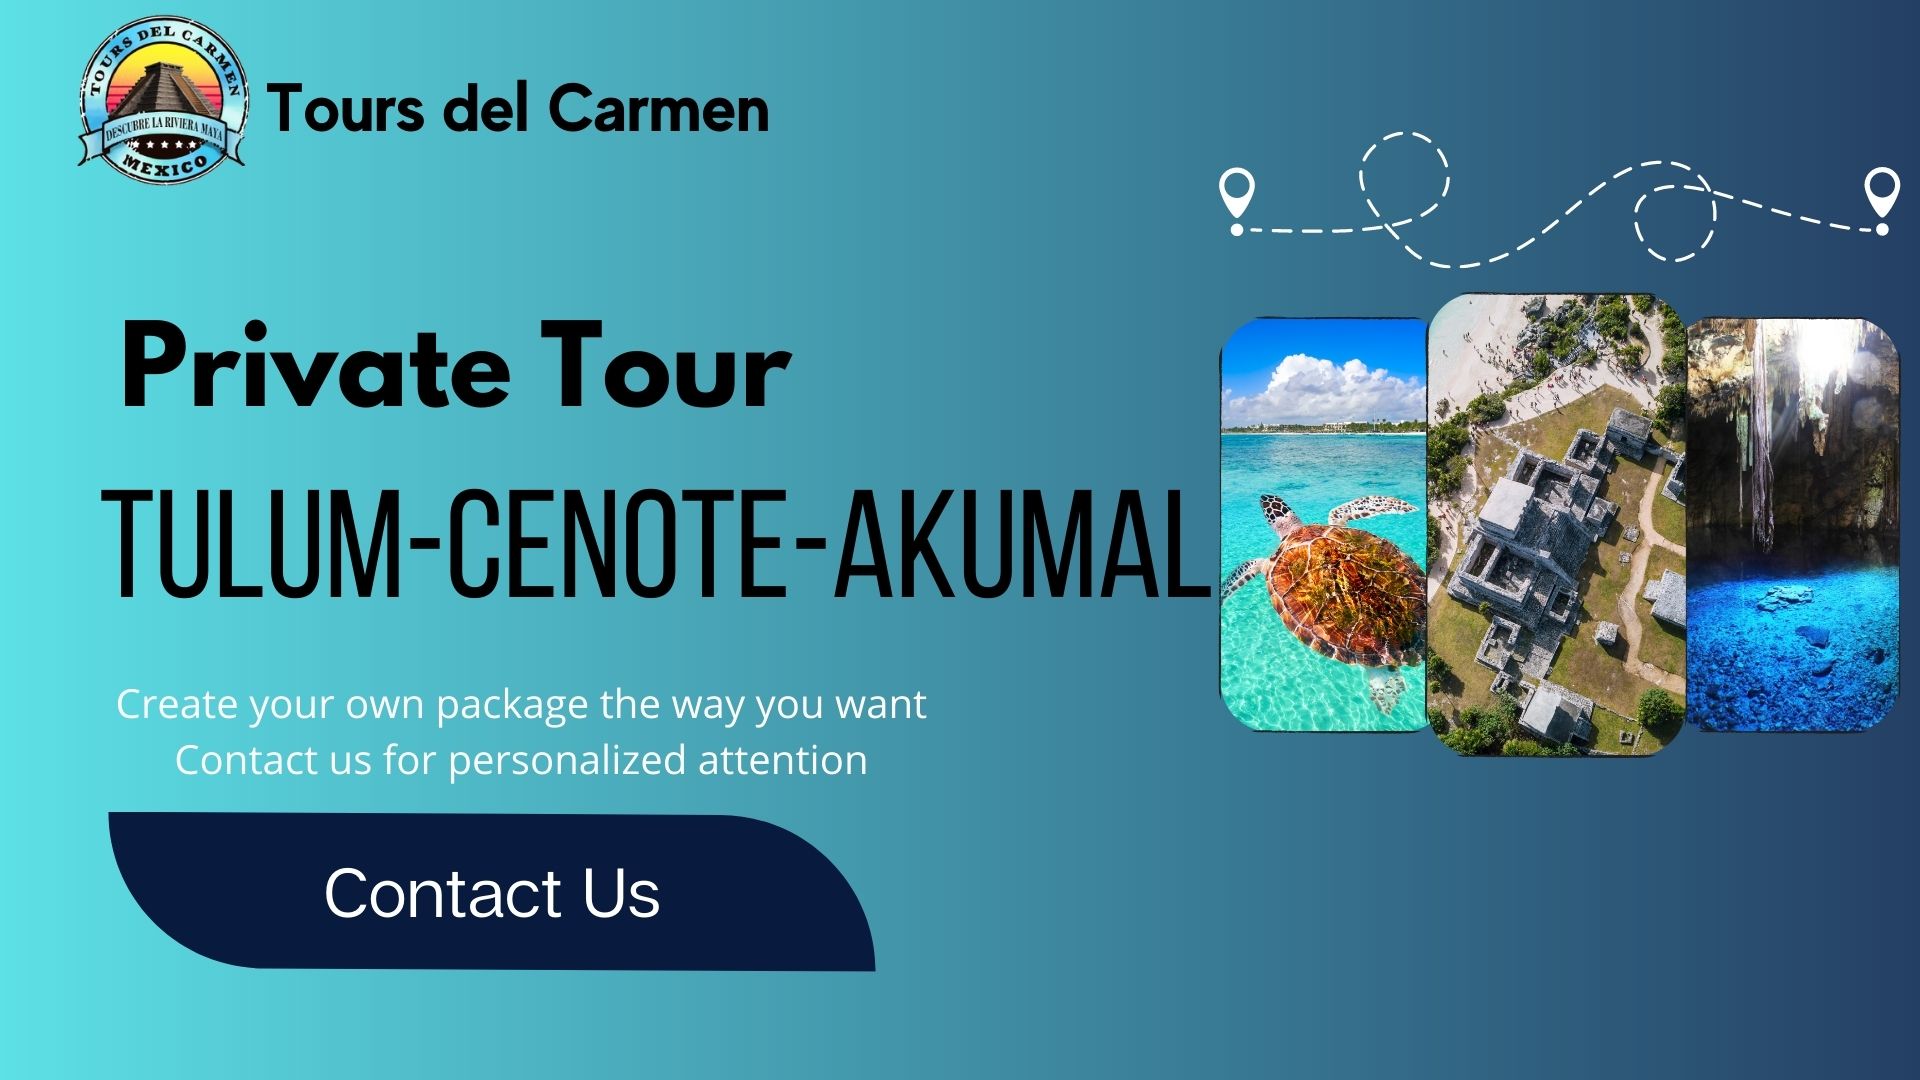 Tulum-Cenote-Akumal Private Tour